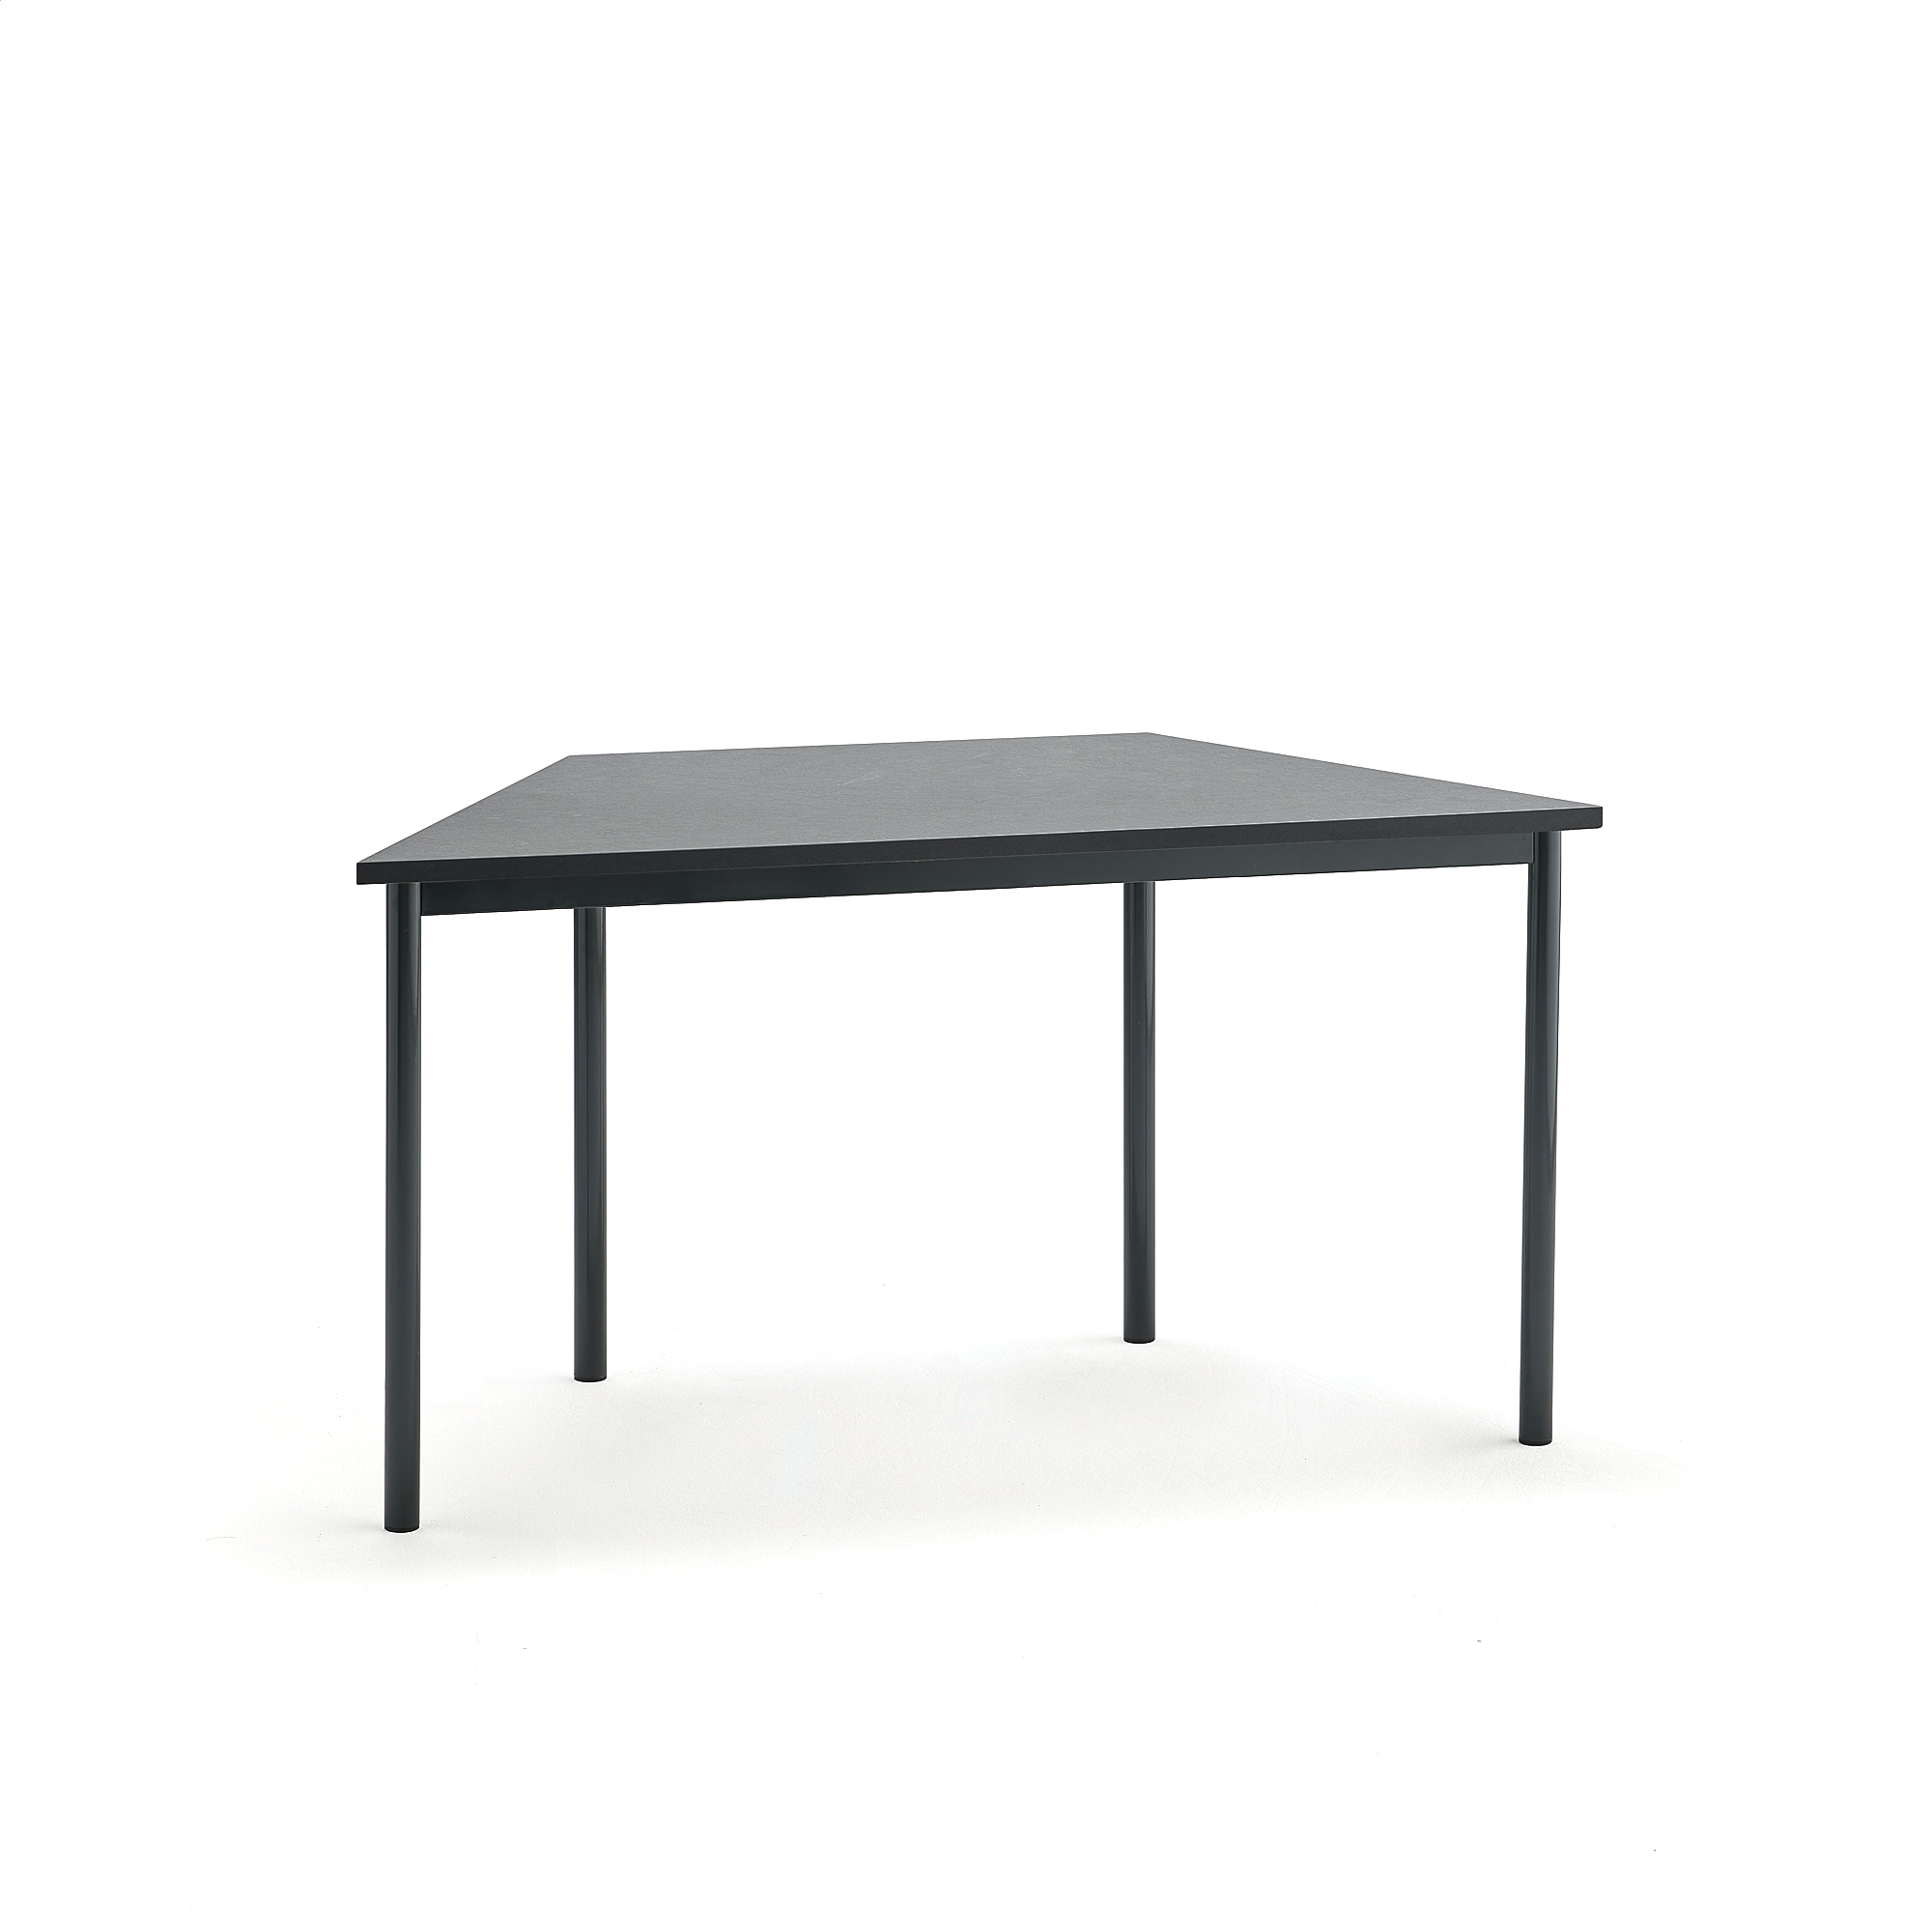 Stůl SONITUS TRAPETS, 1400x700x720 mm, antracitově šedé nohy, deska s linoleem, tmavě šedá